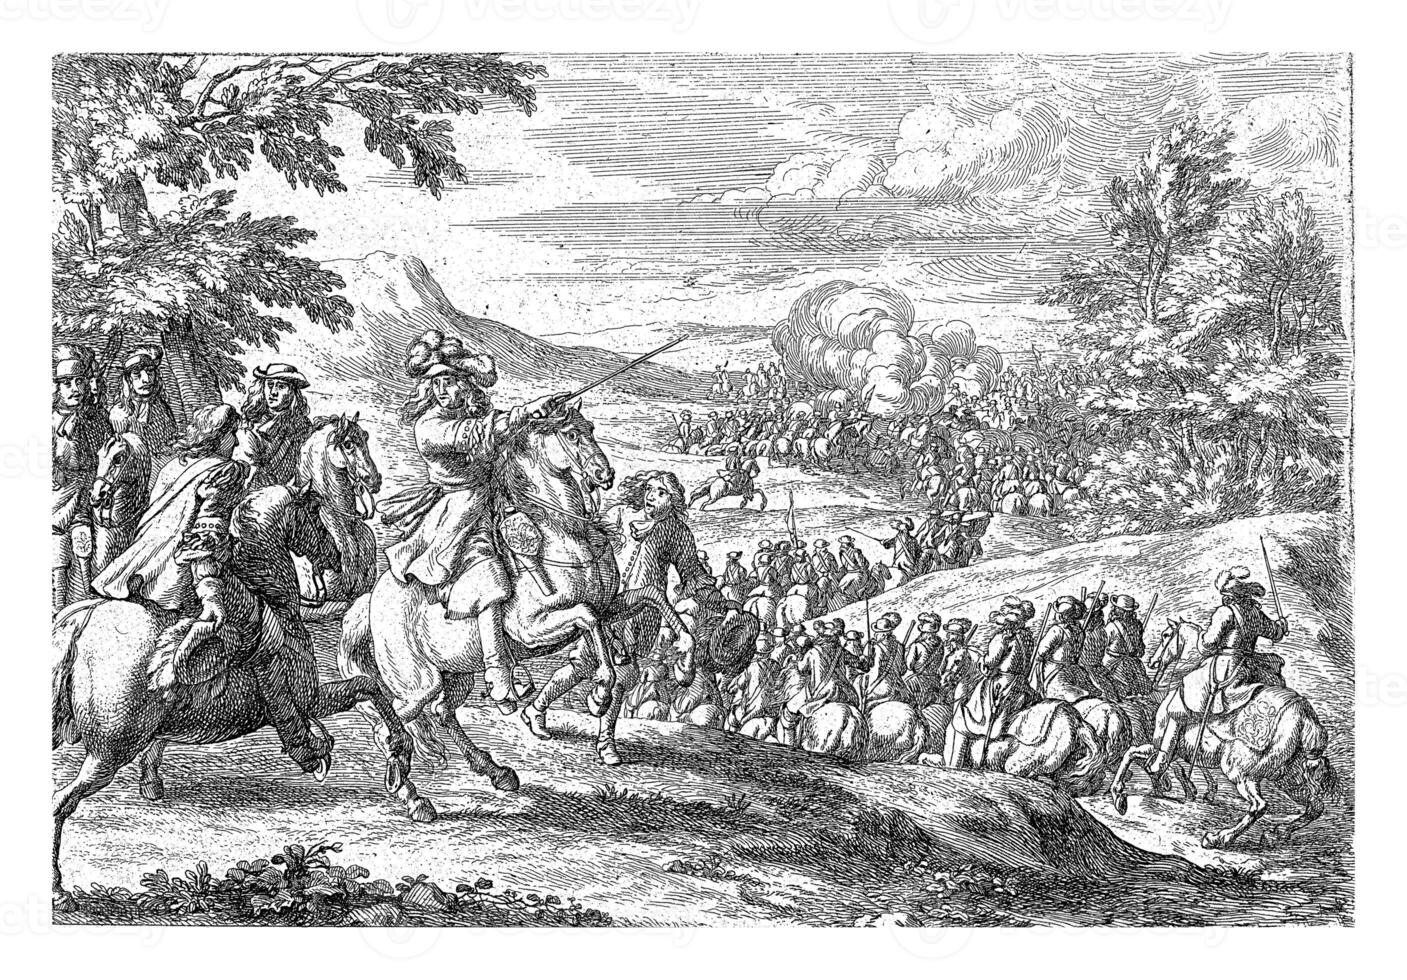 Approaching Cavalry, Jan van Huchtenburg, after Adam Frans van der Meulen, 1674 - 1733 photo